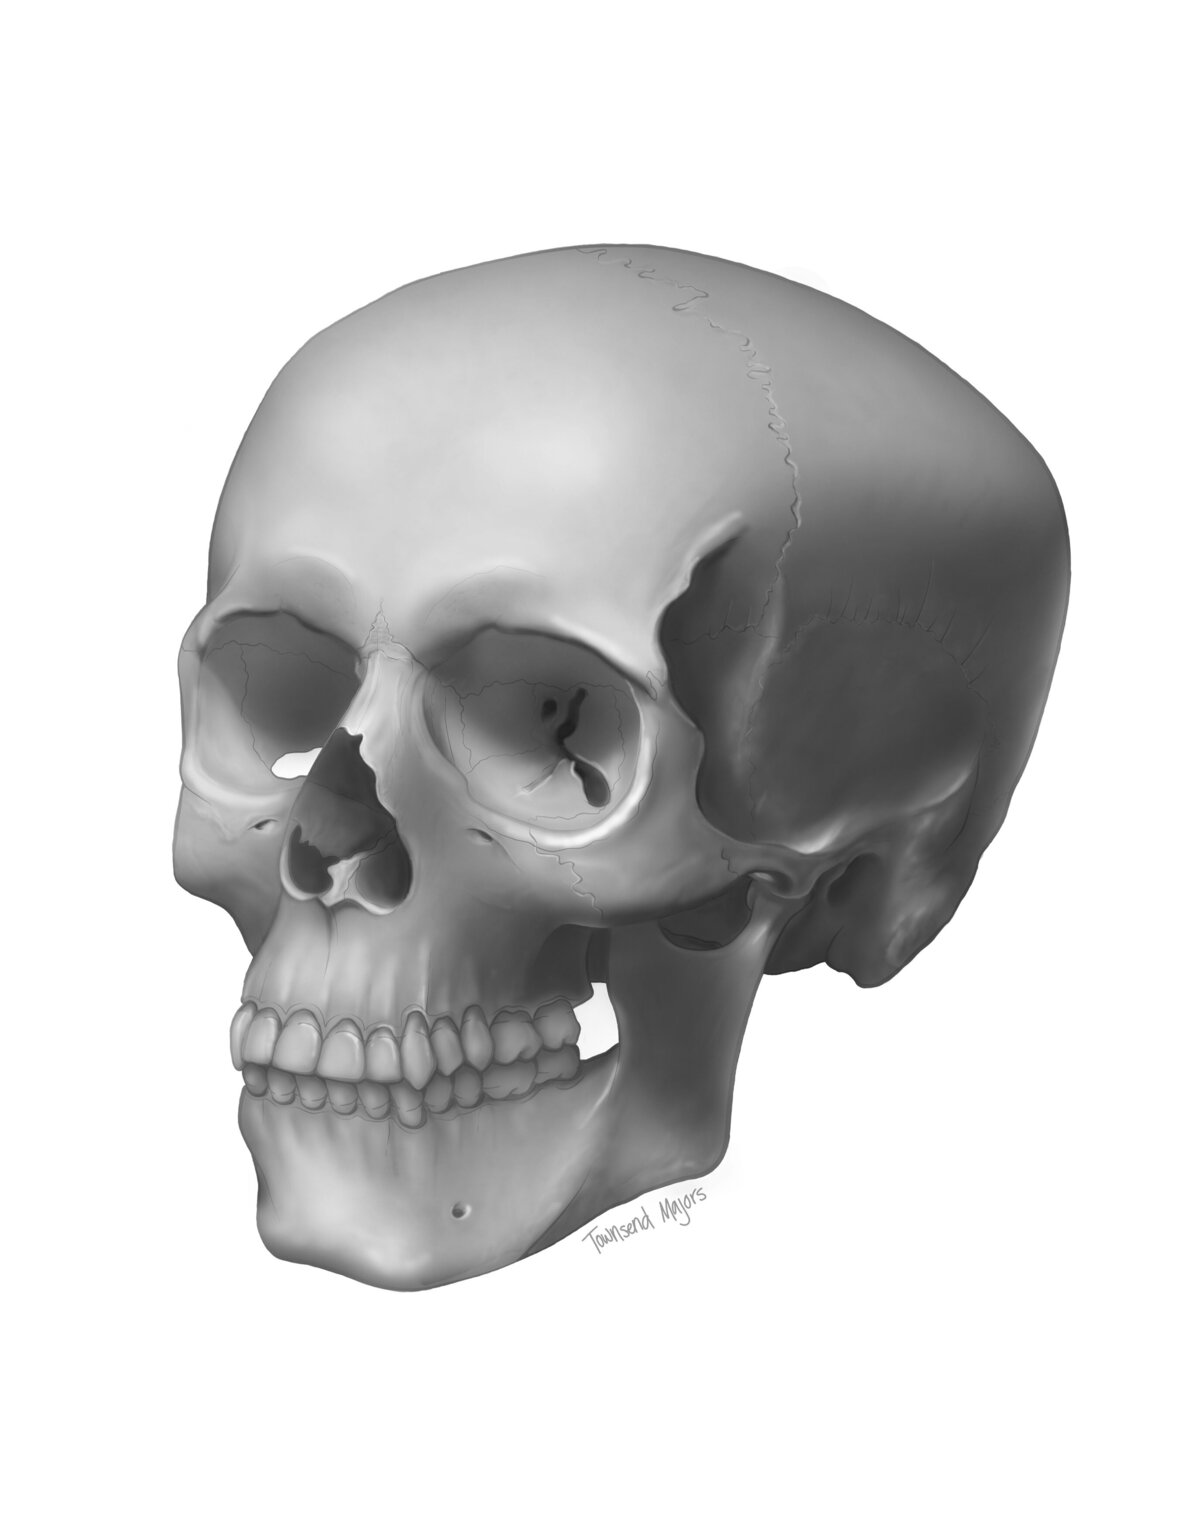 Townsend Majors' illustration of an anatomical skull